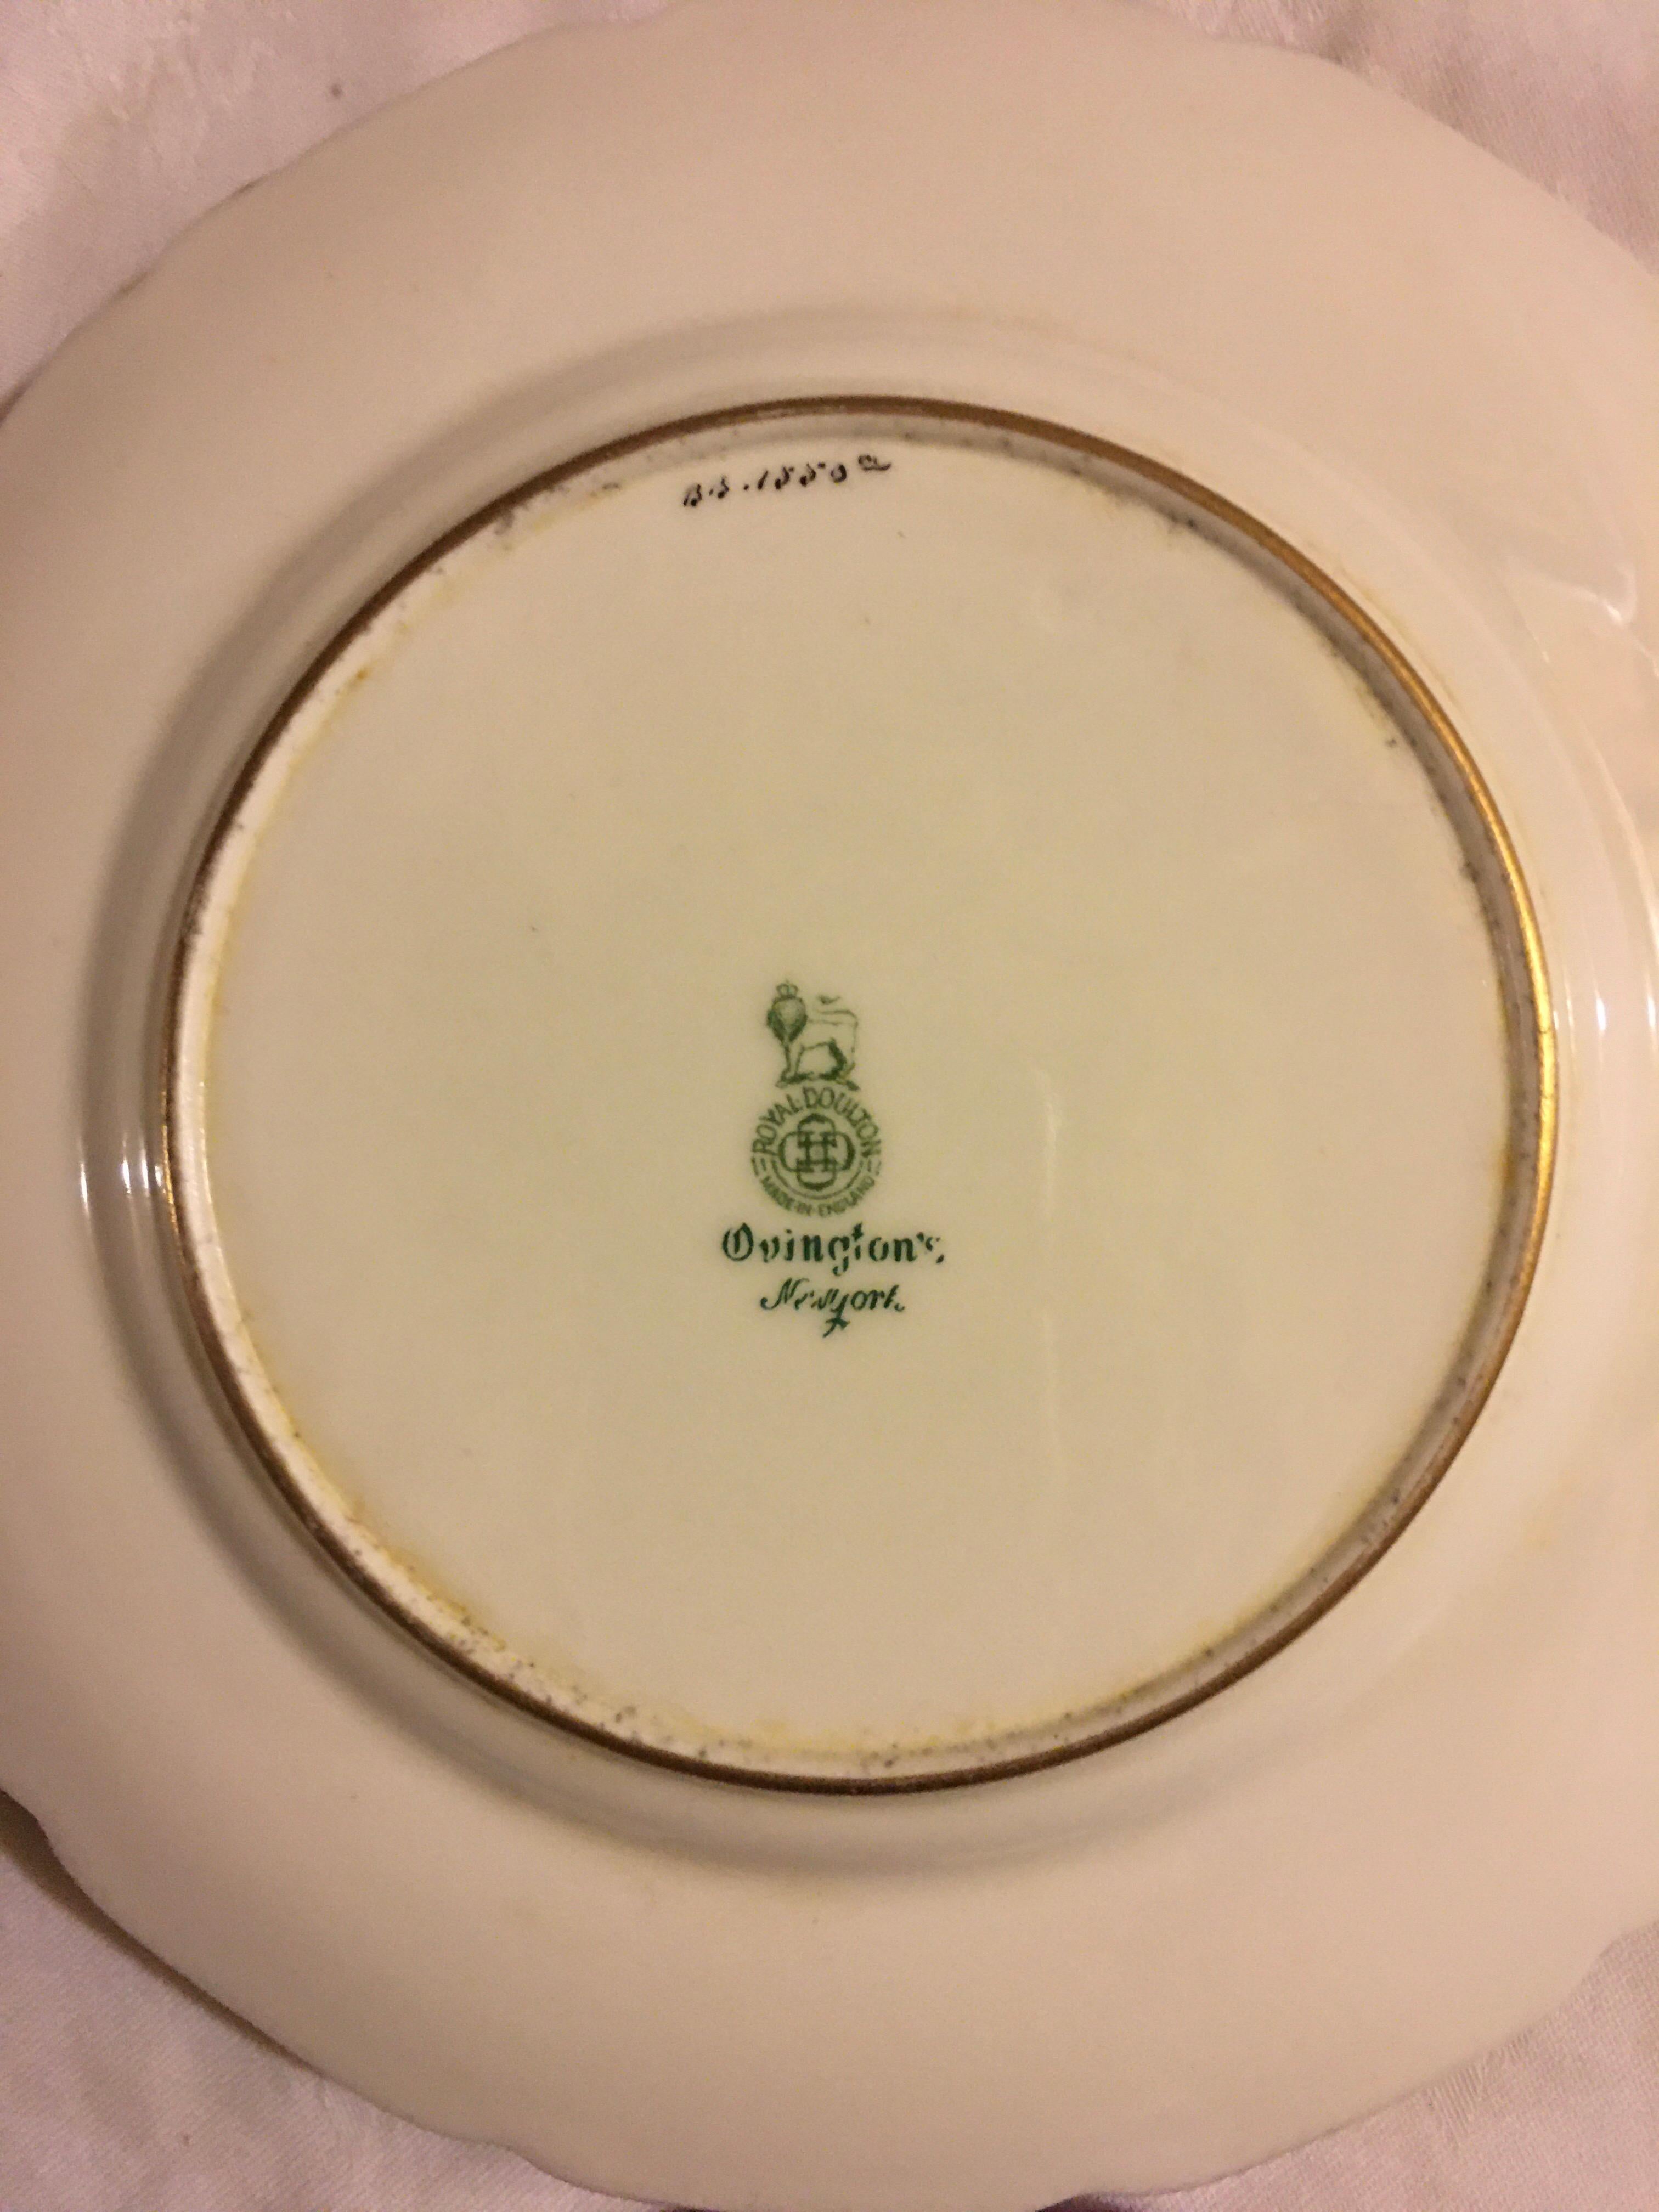 19th Century Ovington’s New York Gold Encrusted Royal Doulton Teal on White Dessert Plates For Sale